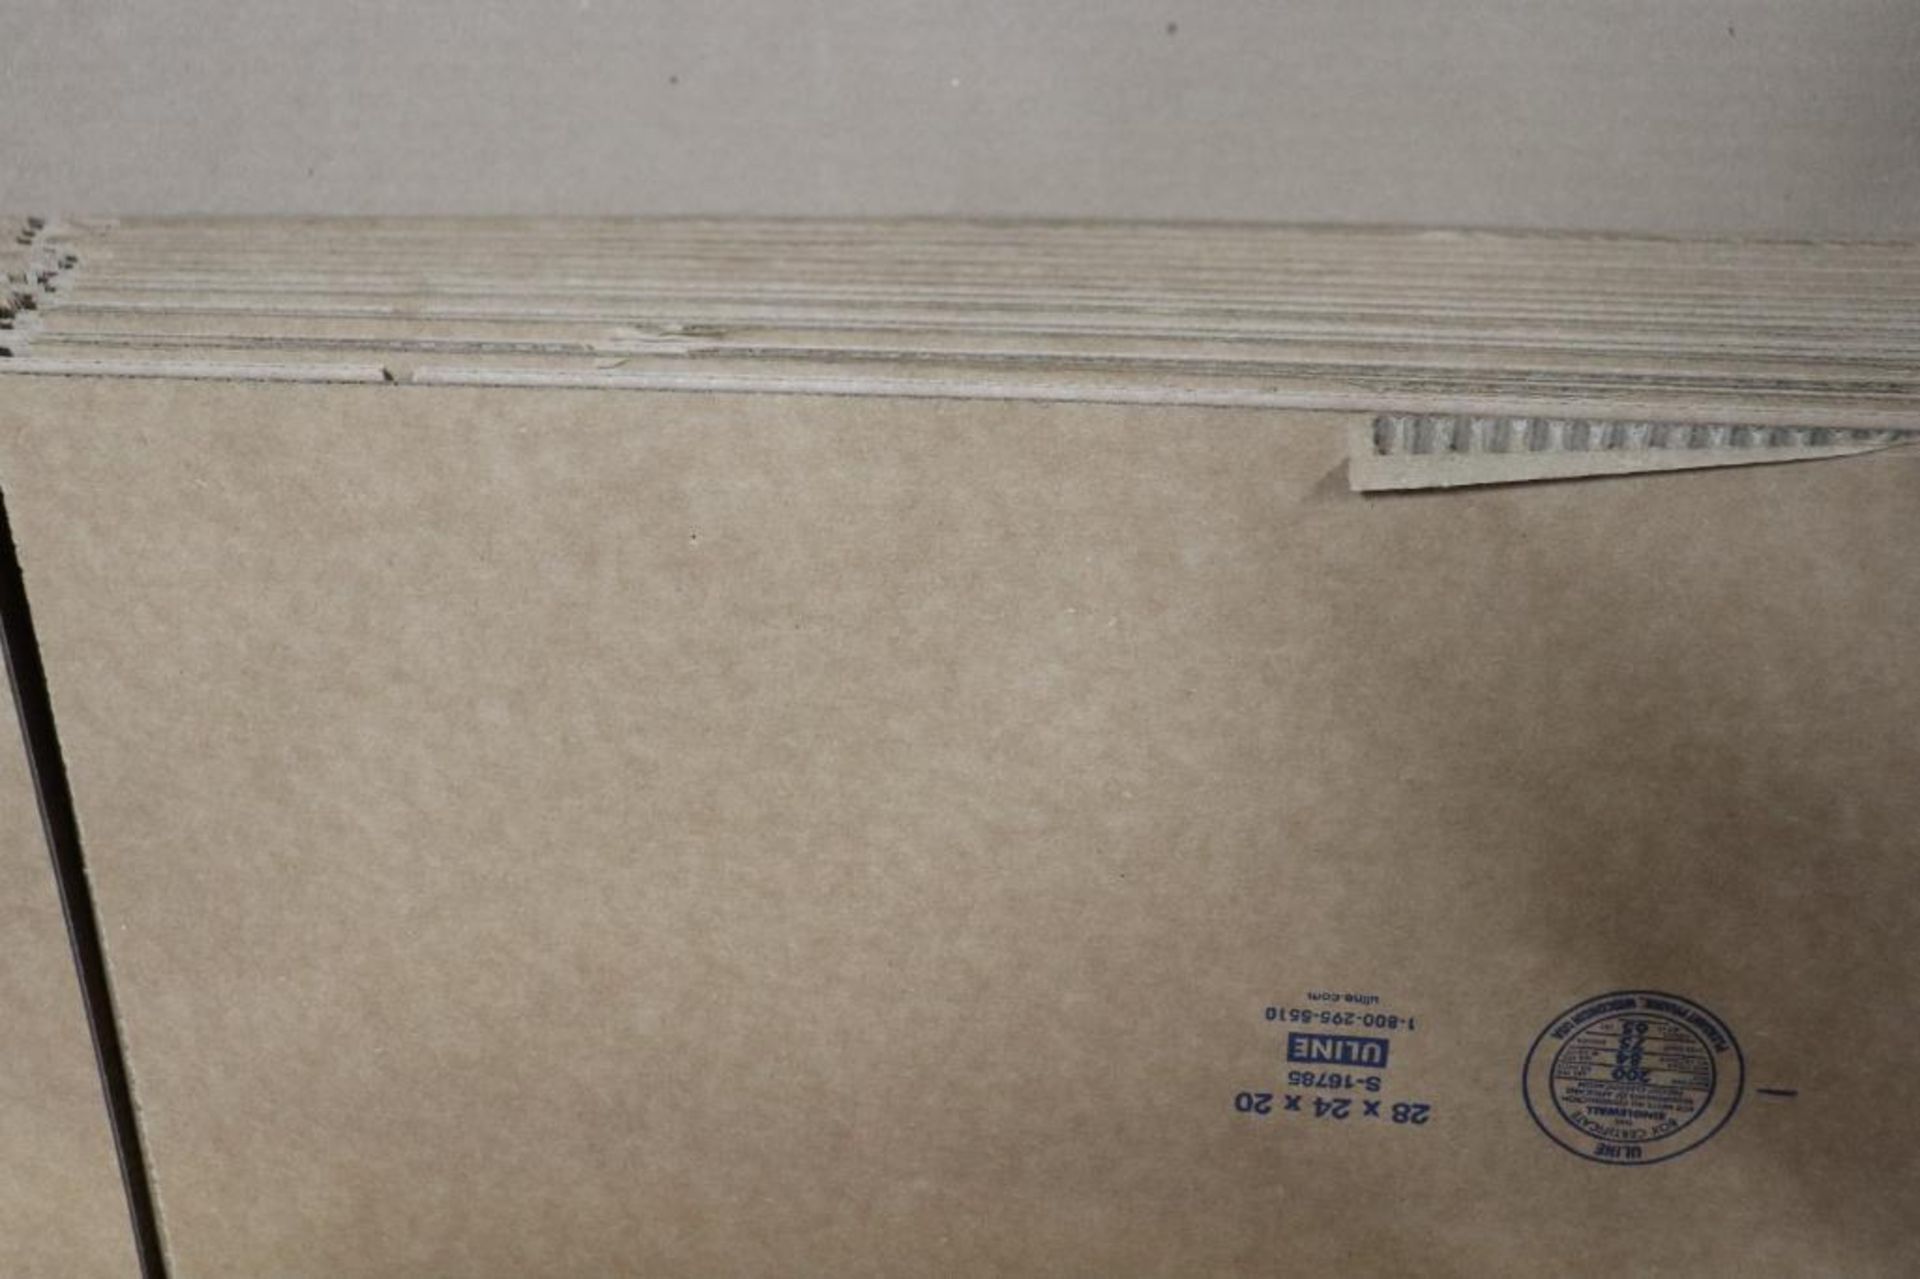 Uline cardboard boxes - Image 21 of 25